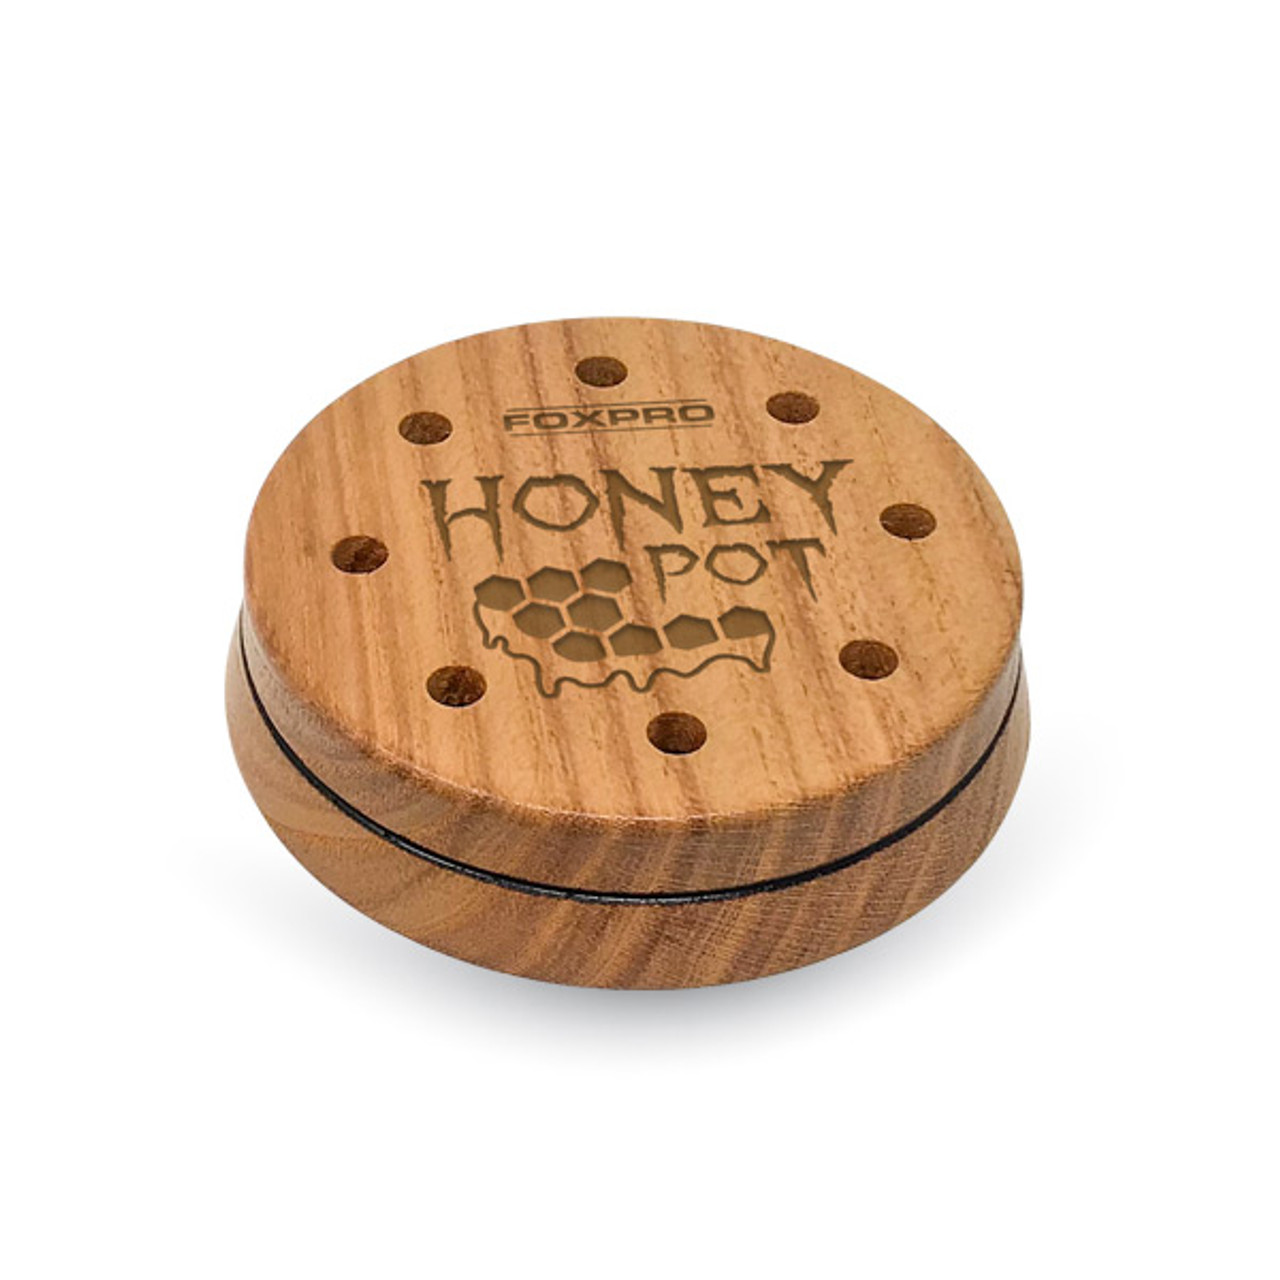 Honey Pot Crystal Friction Turkey Call by FoxPro- Back